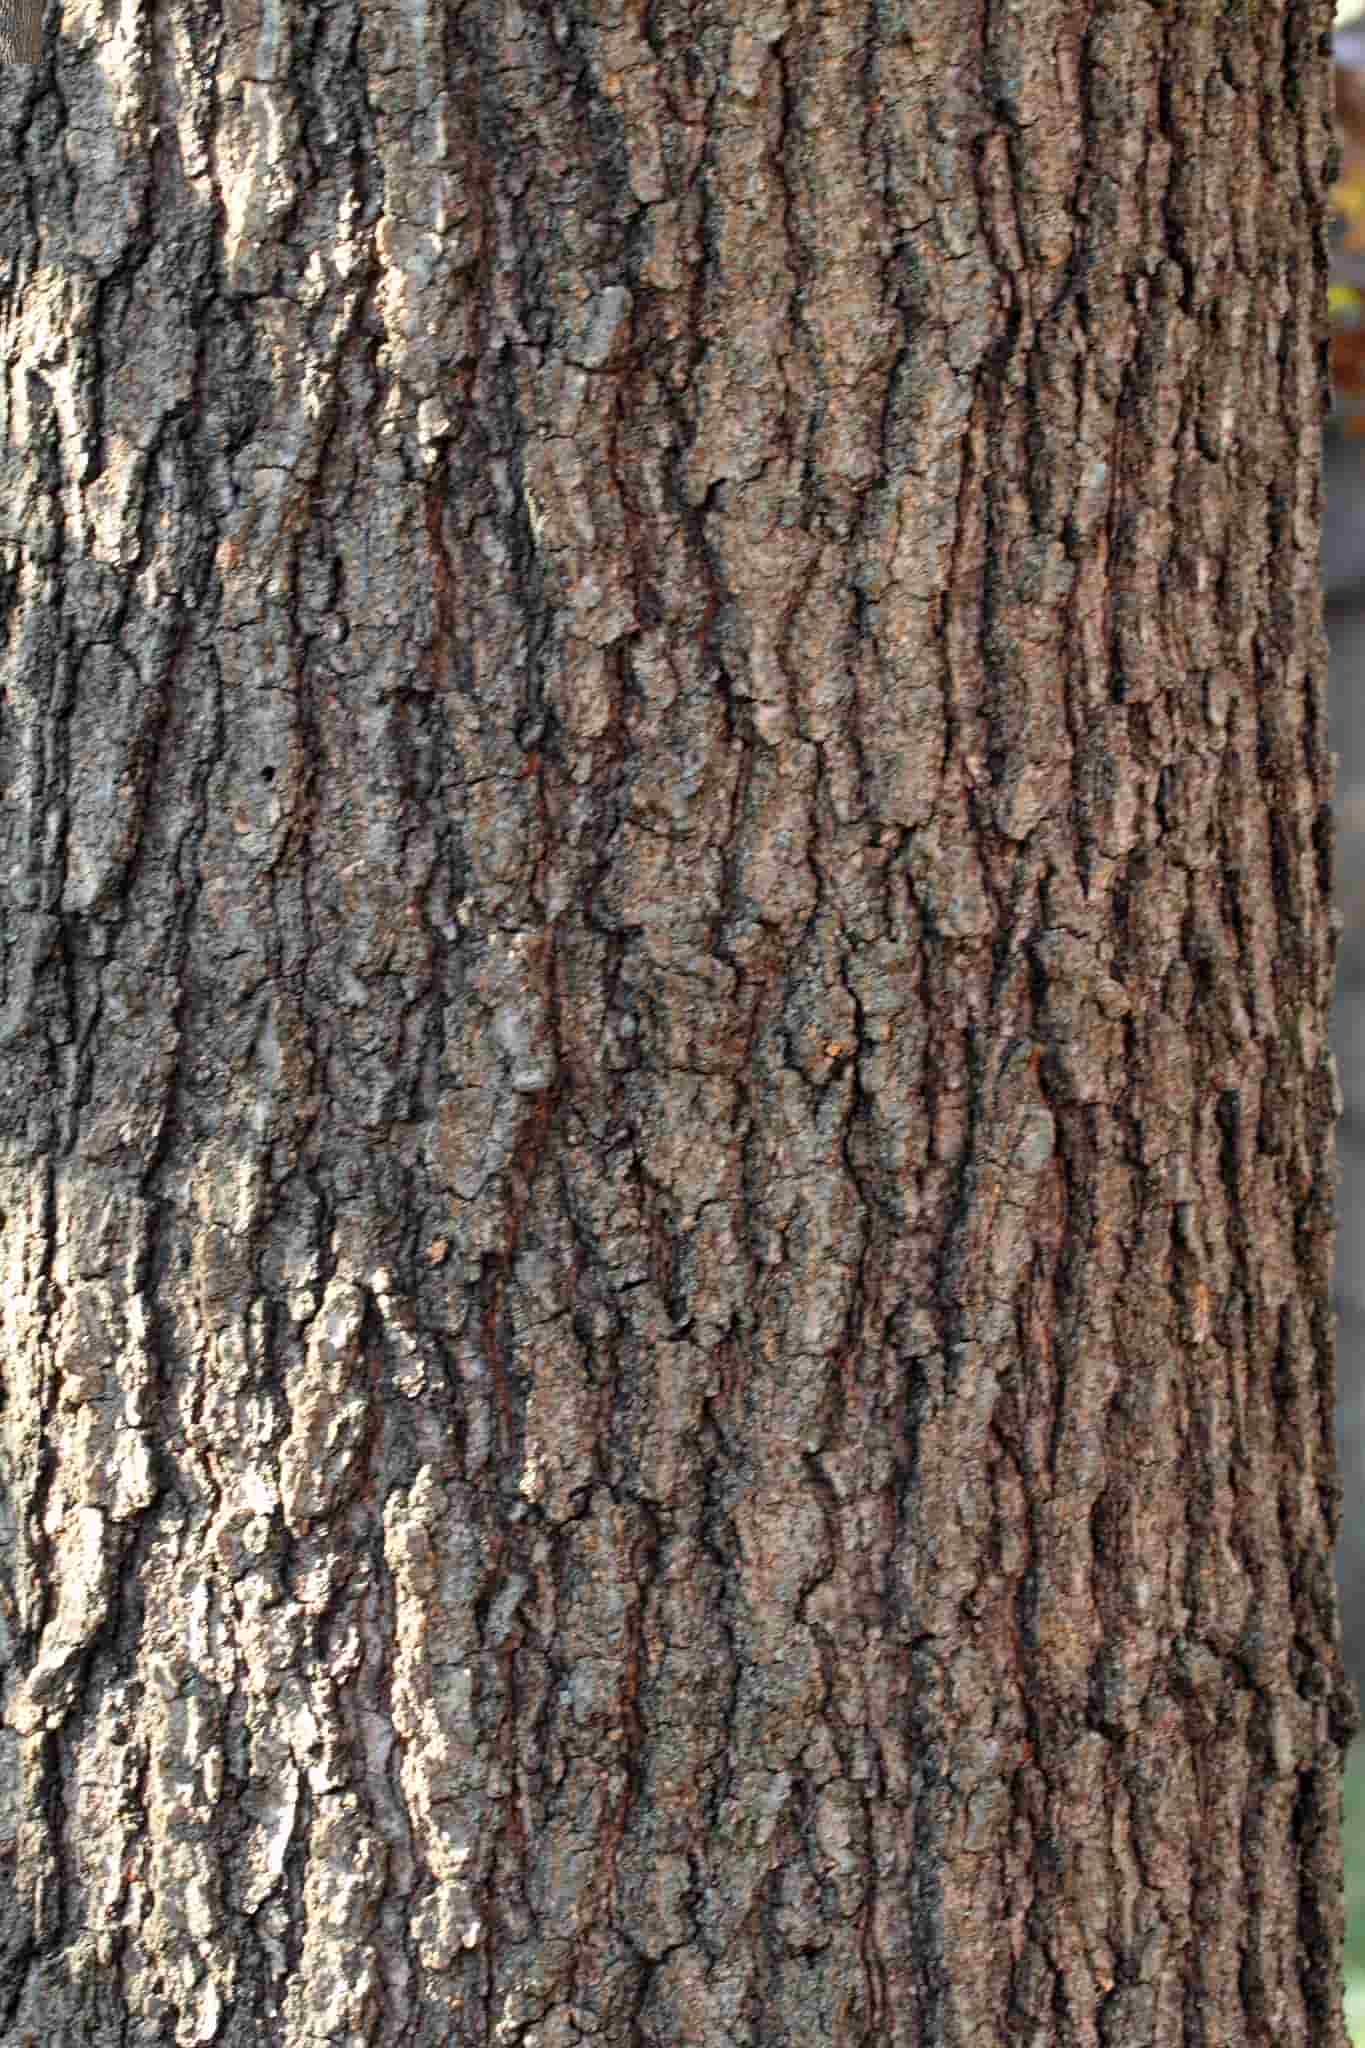 Black Oak Tree Bark